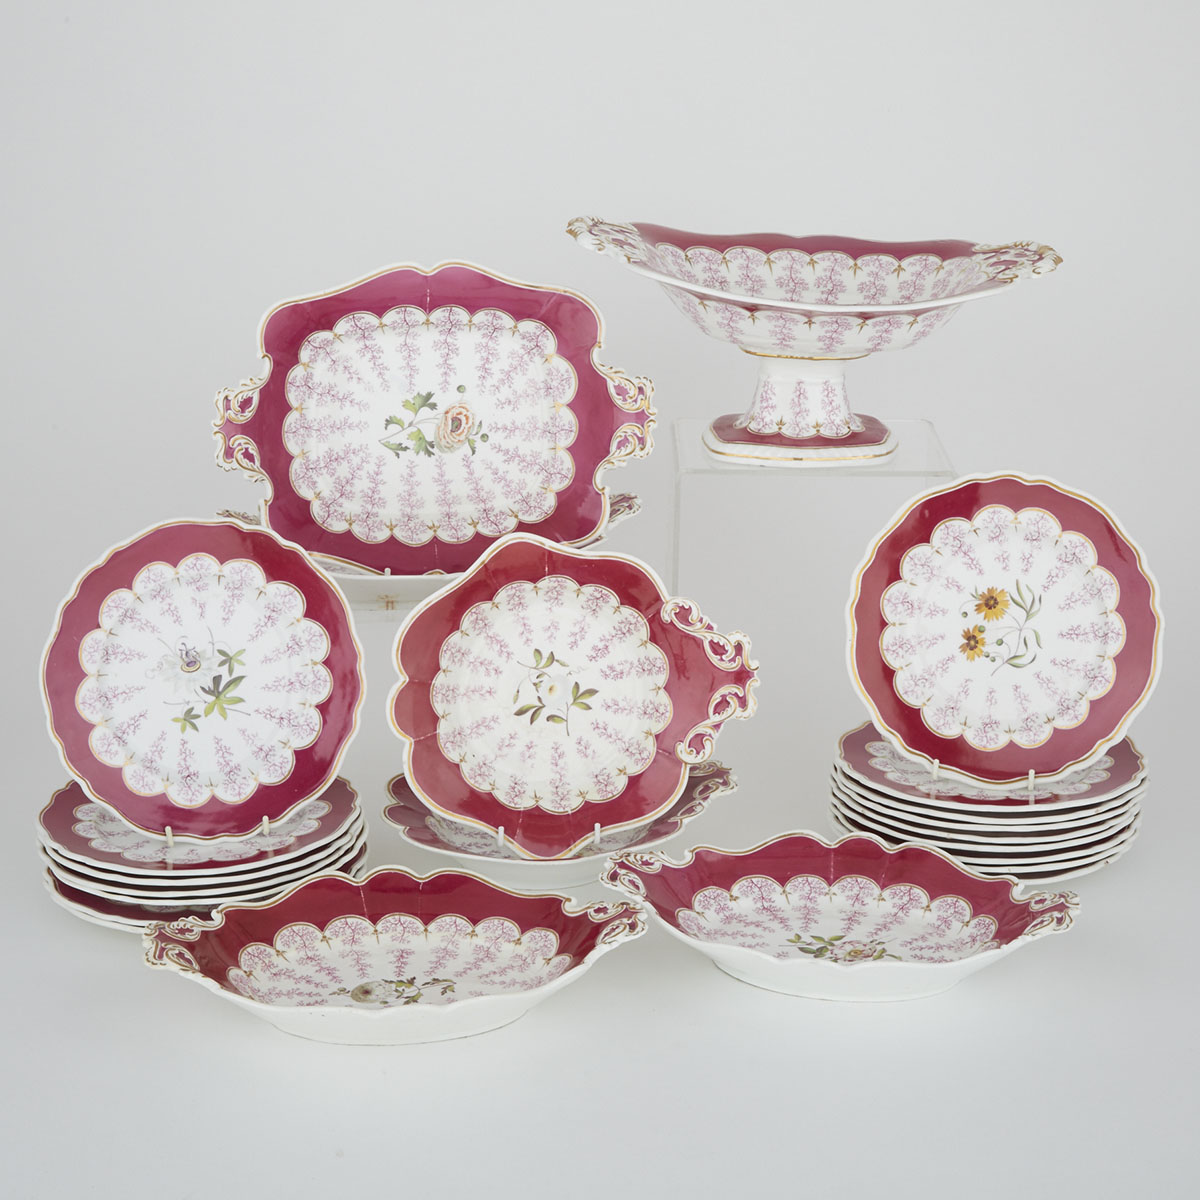 English Porcelain Dessert Service, c.1830-40